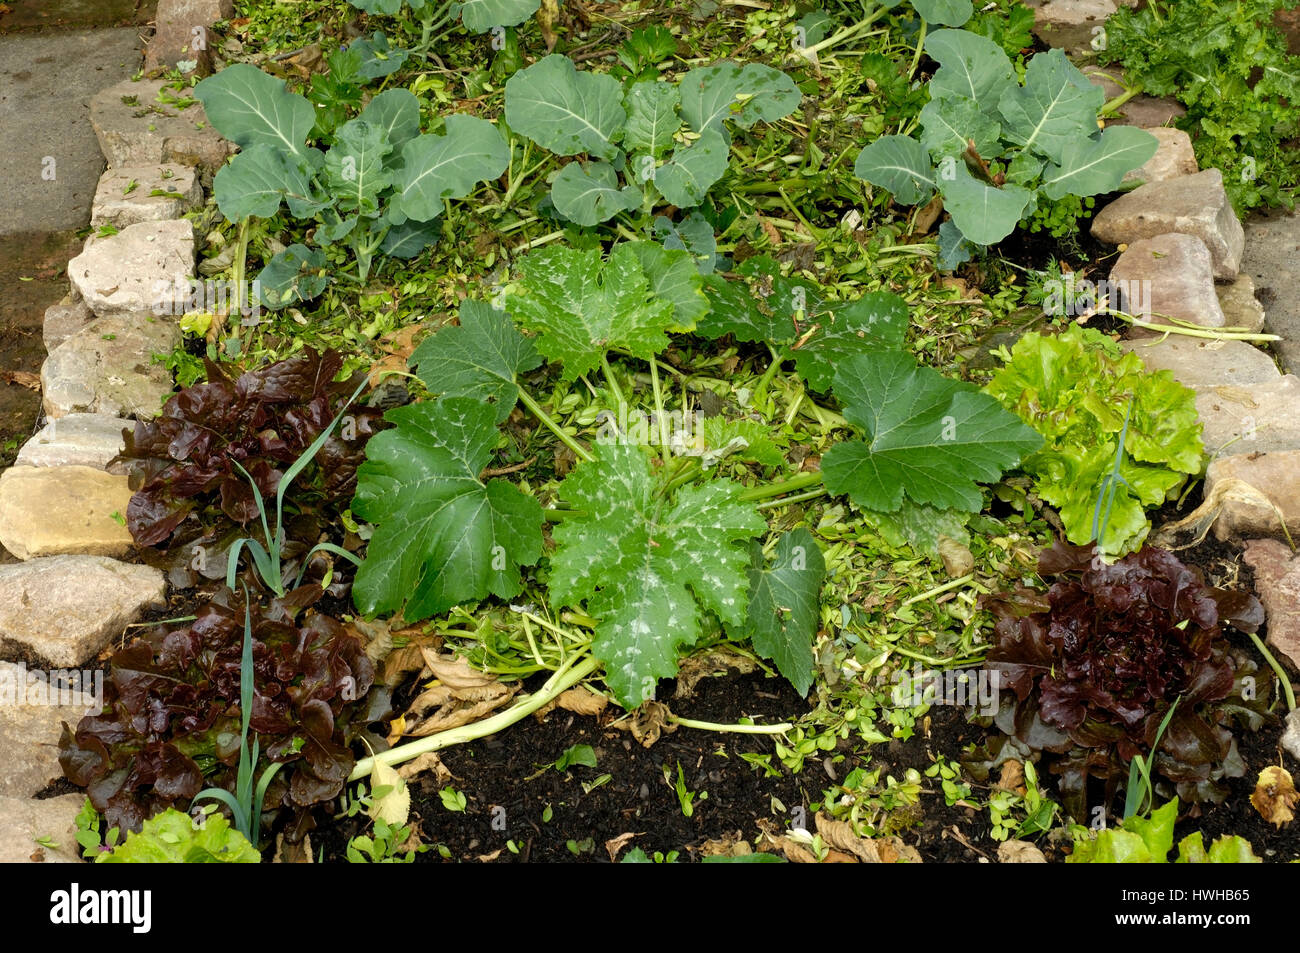 Bed of vegetables mulch, vegetable bed with salad and cabbage, gemulcht  , Bed of vegetables mulch | Gemuesebeet mit Salat und Kohl, gemulcht  / Stock Photo